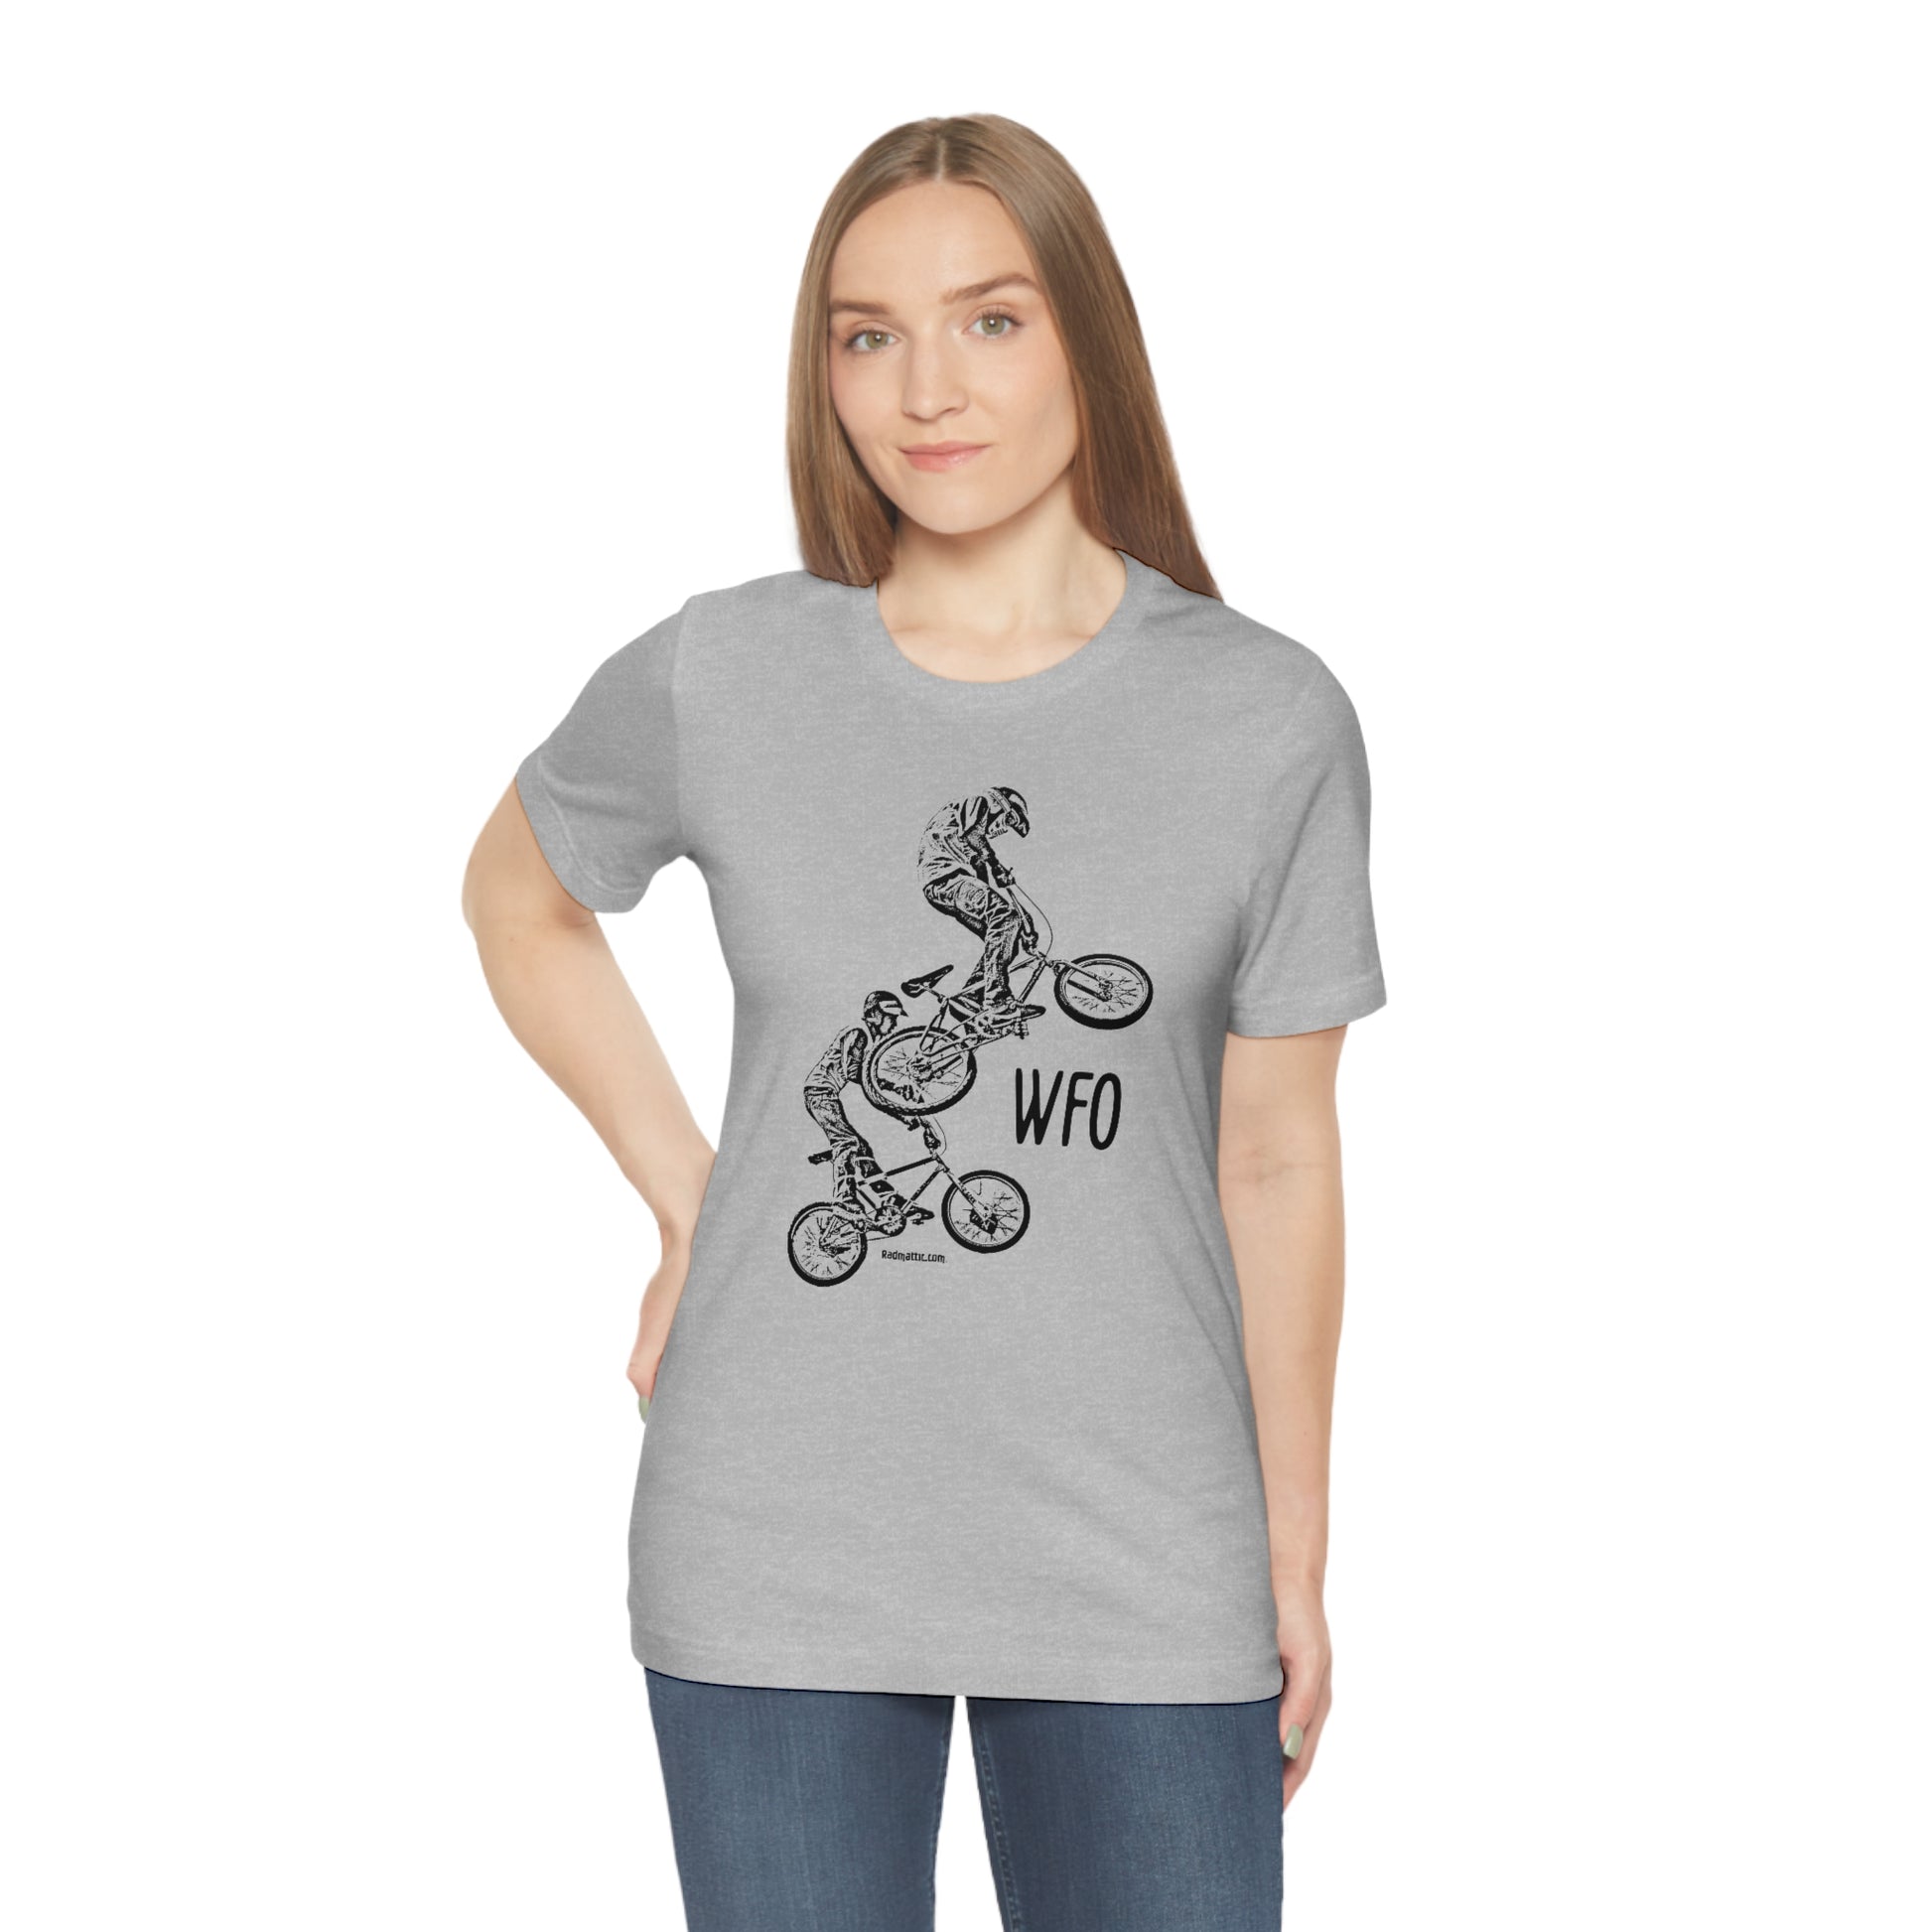 WFO BMX T-Shirt | BMX T-Shirts | BMX Shirts